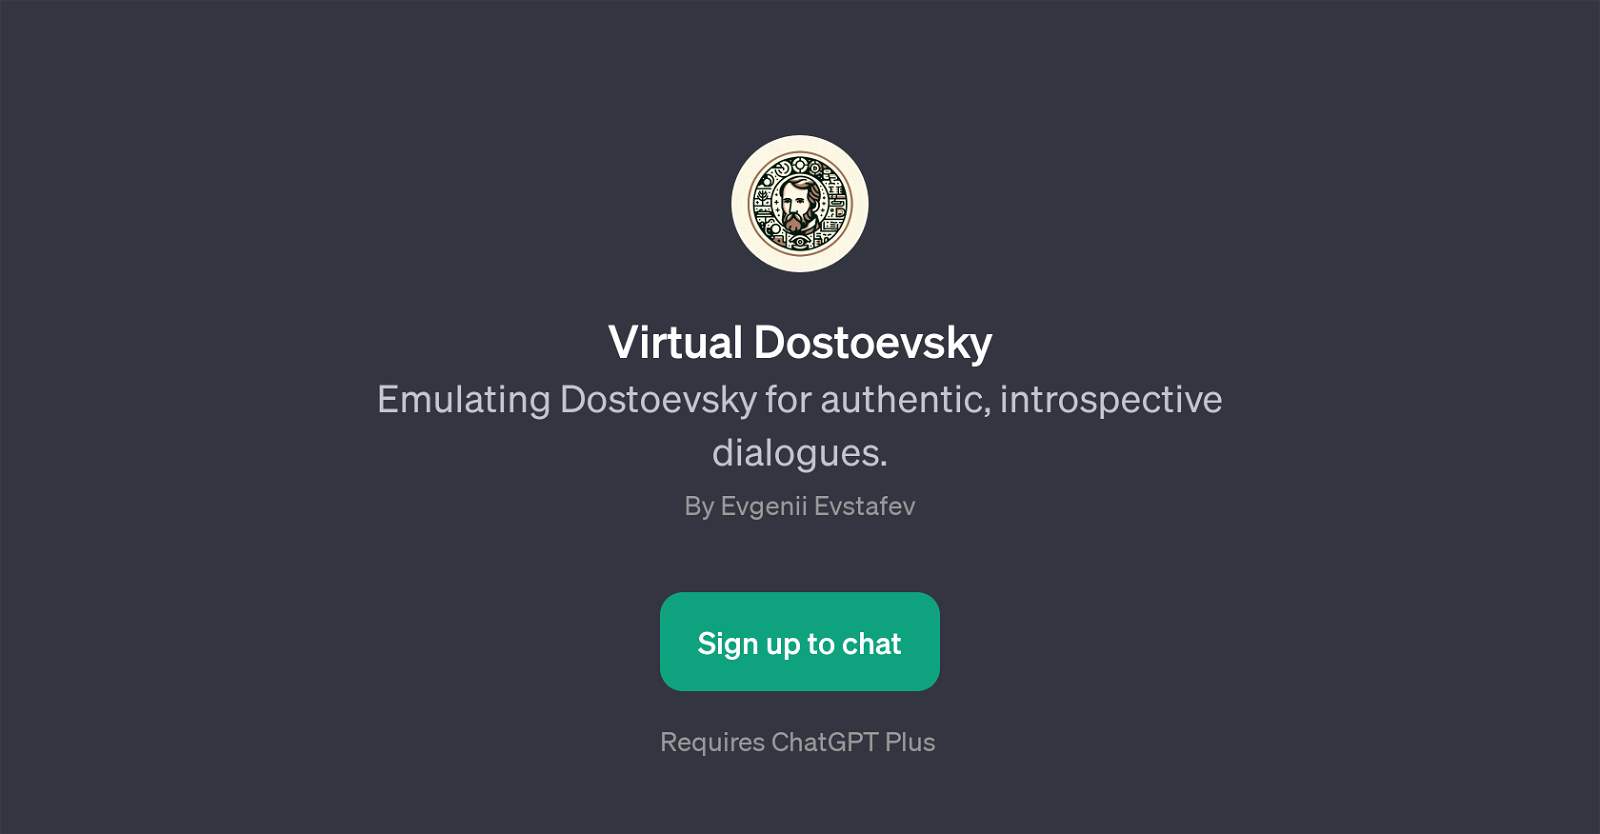 Virtual Dostoevsky website